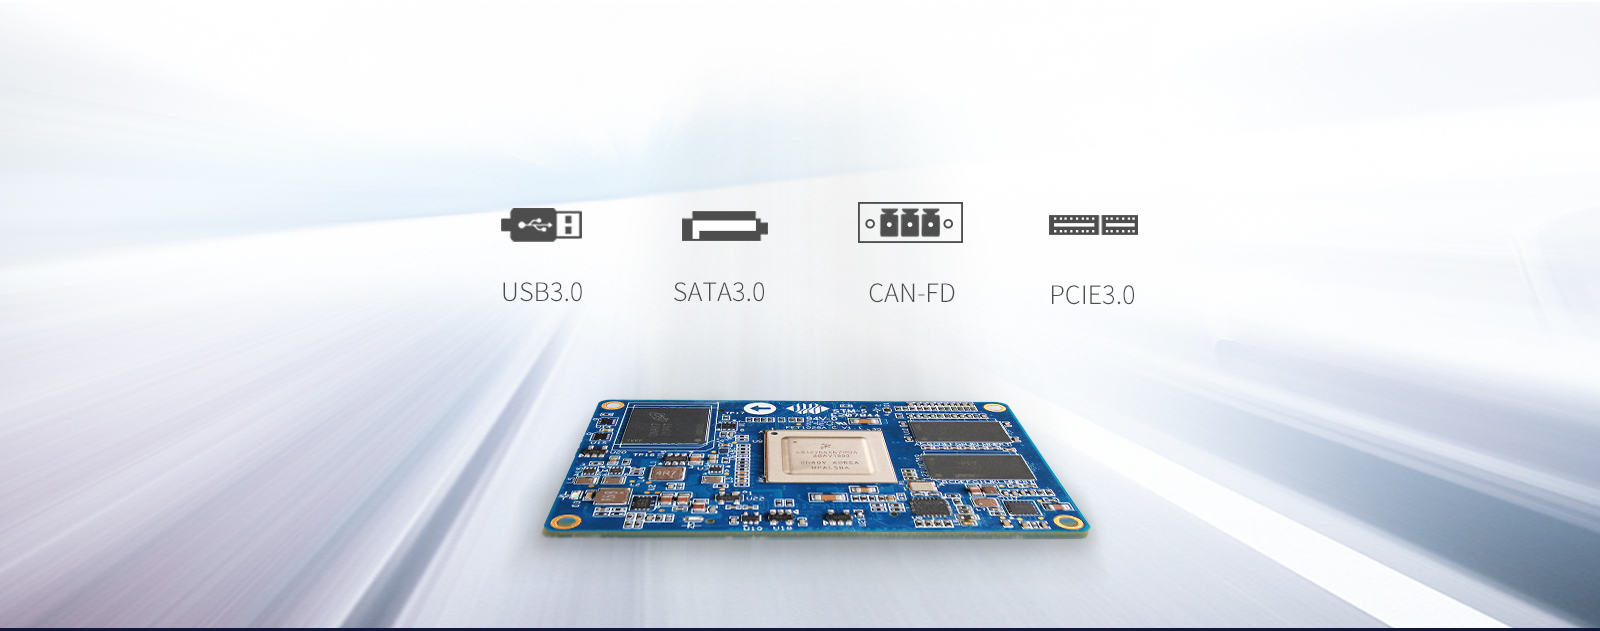 LS1028A 6 Gigabit Ethernet ports, PCIe3.0, SATA3.0, USB3.0, CAN-FD